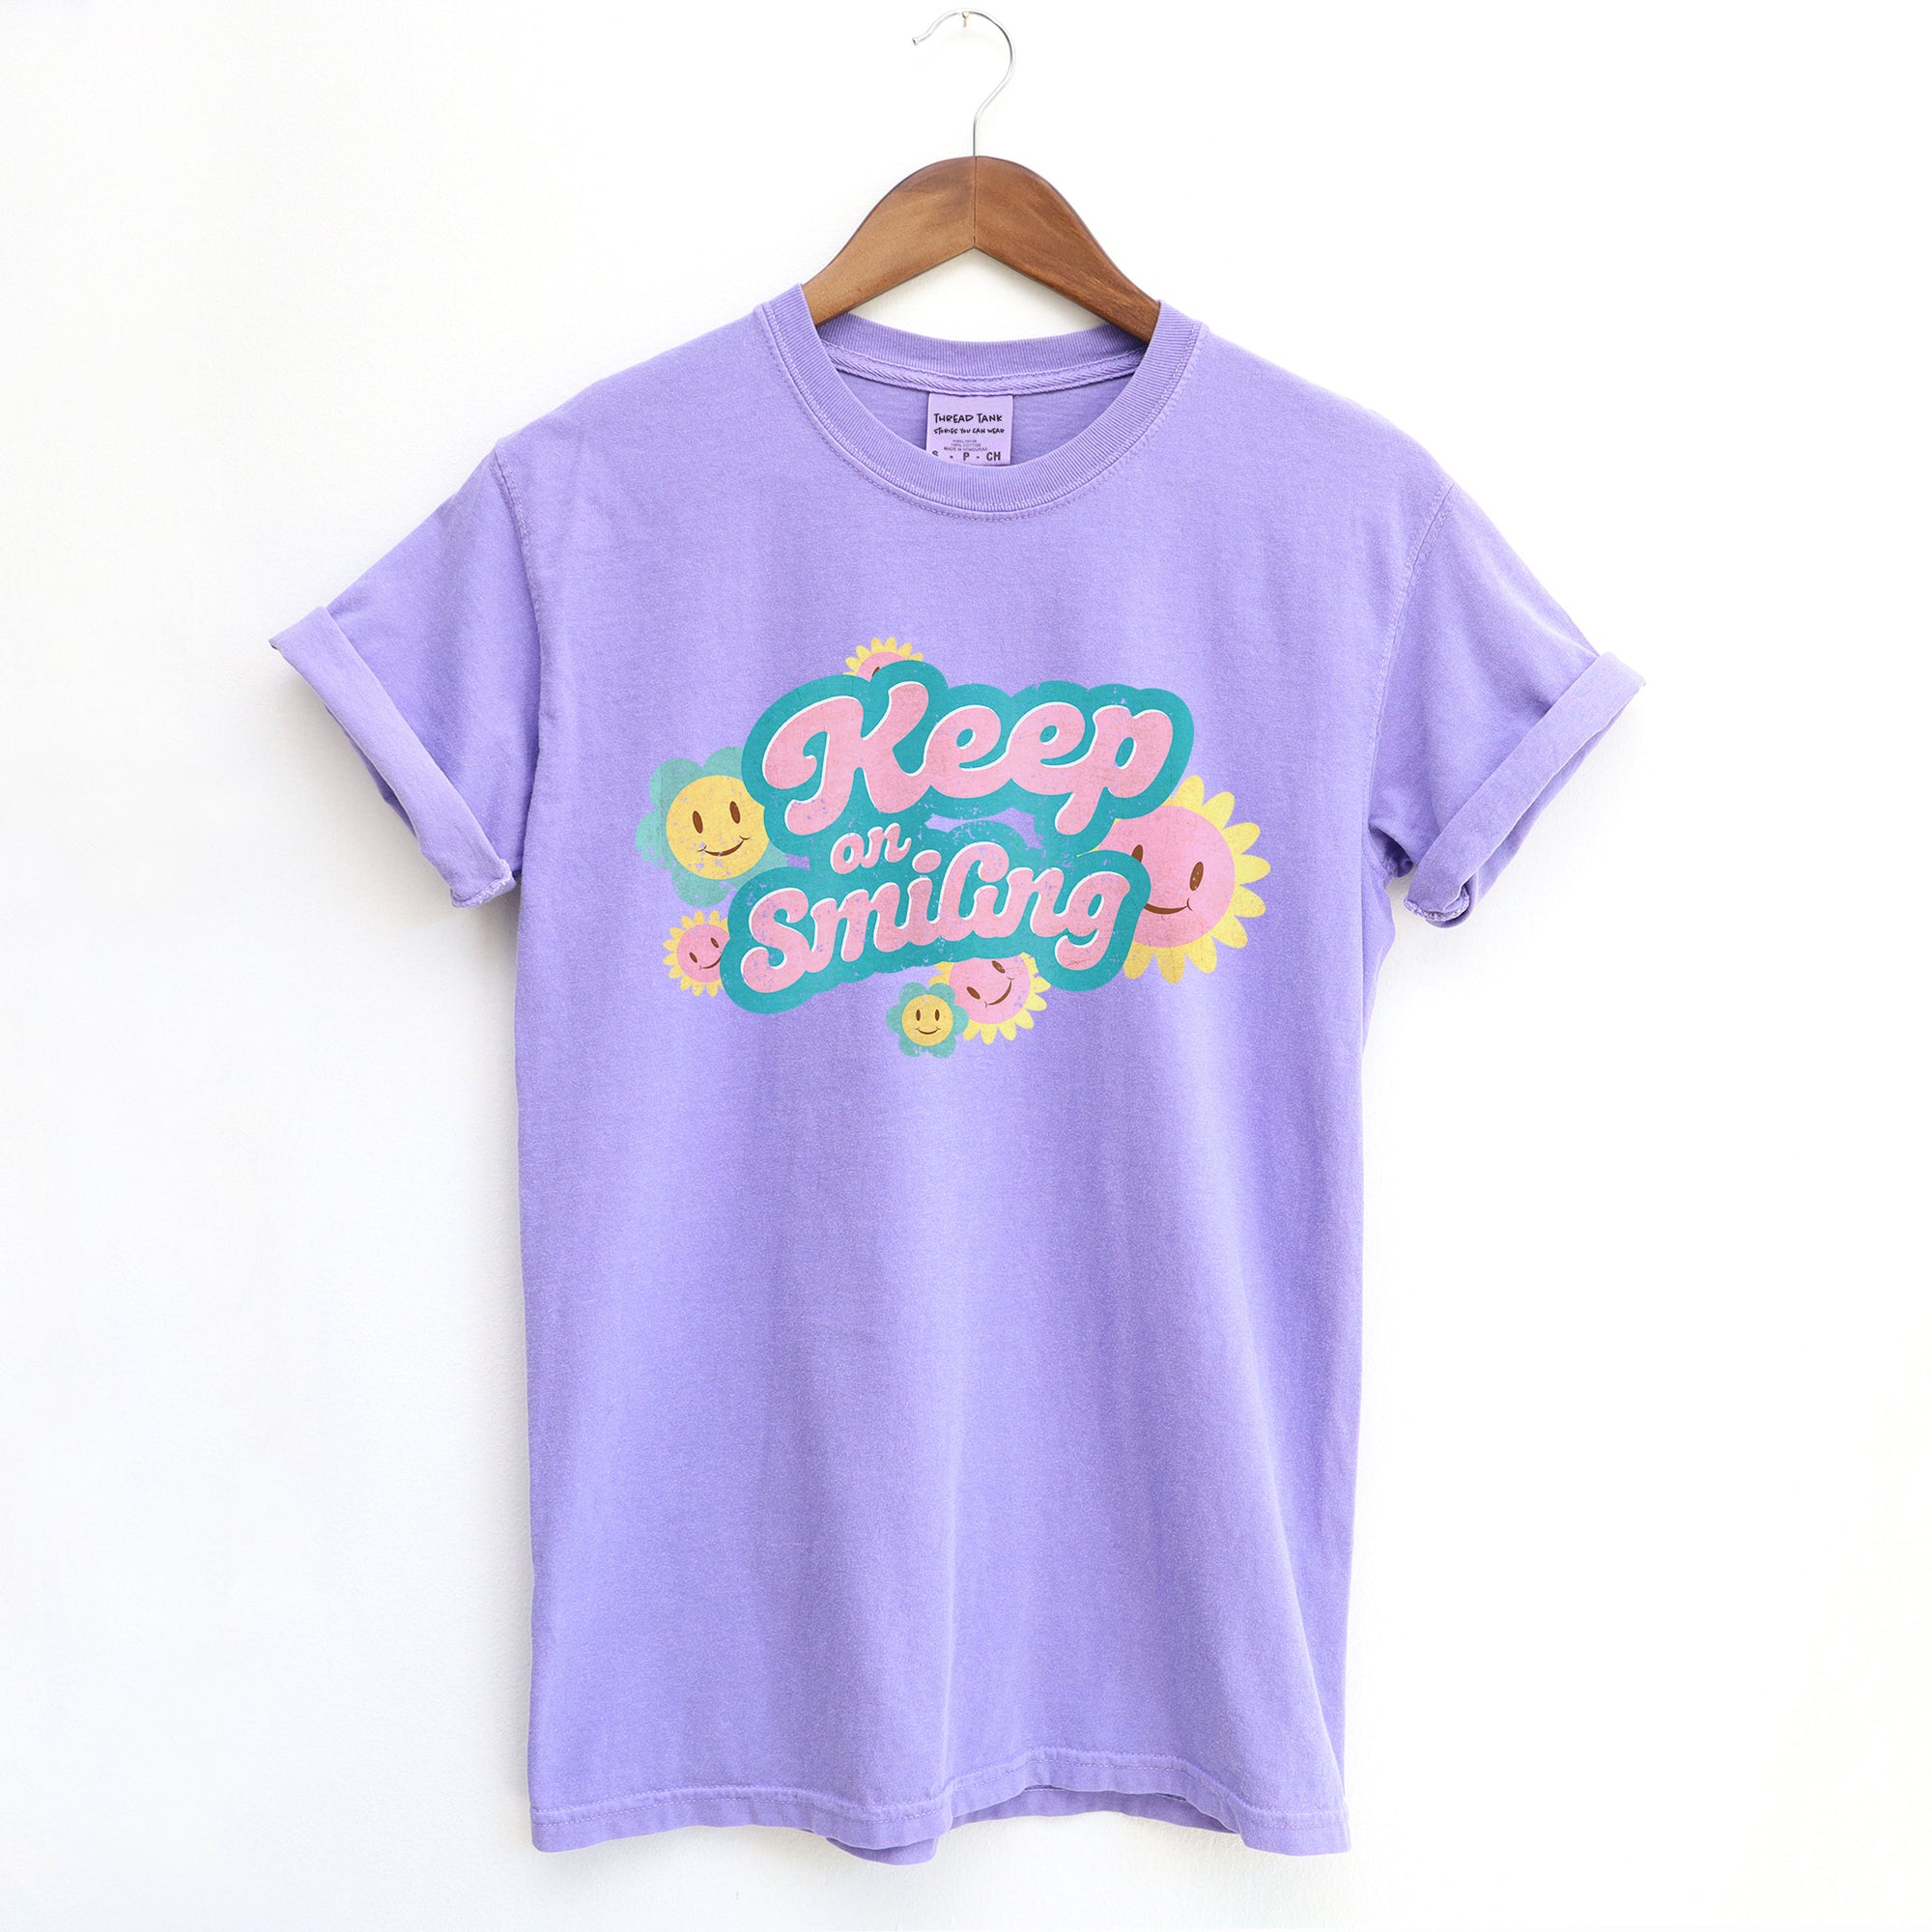 Keep On Smiling Garment-Dyed Tee Vintage Violet Image